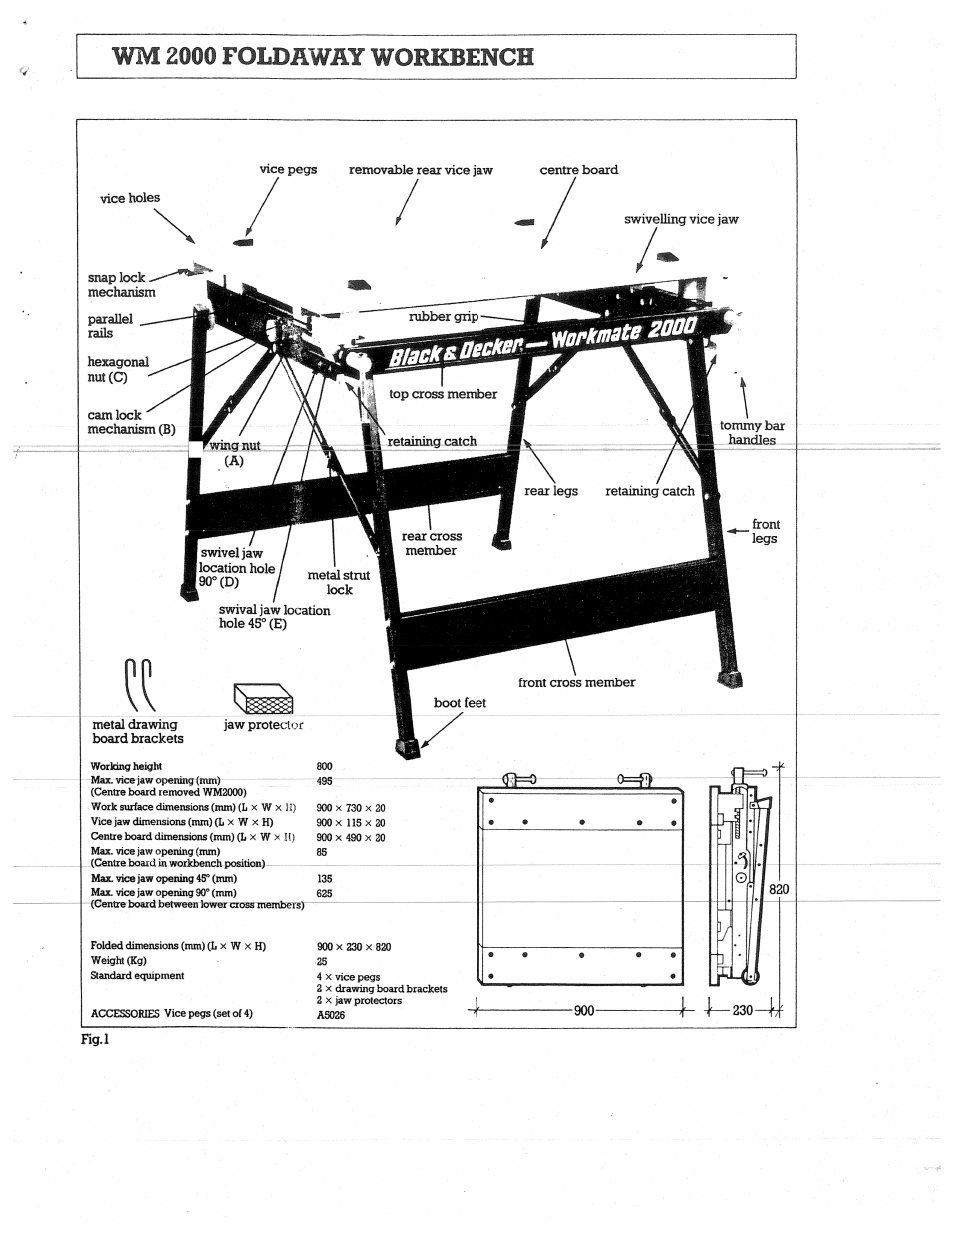 Wm 2000 foldhway workbench, Centre board, Snap l^k | Black & Decker WM2000  User Manual | Page 3 / 8